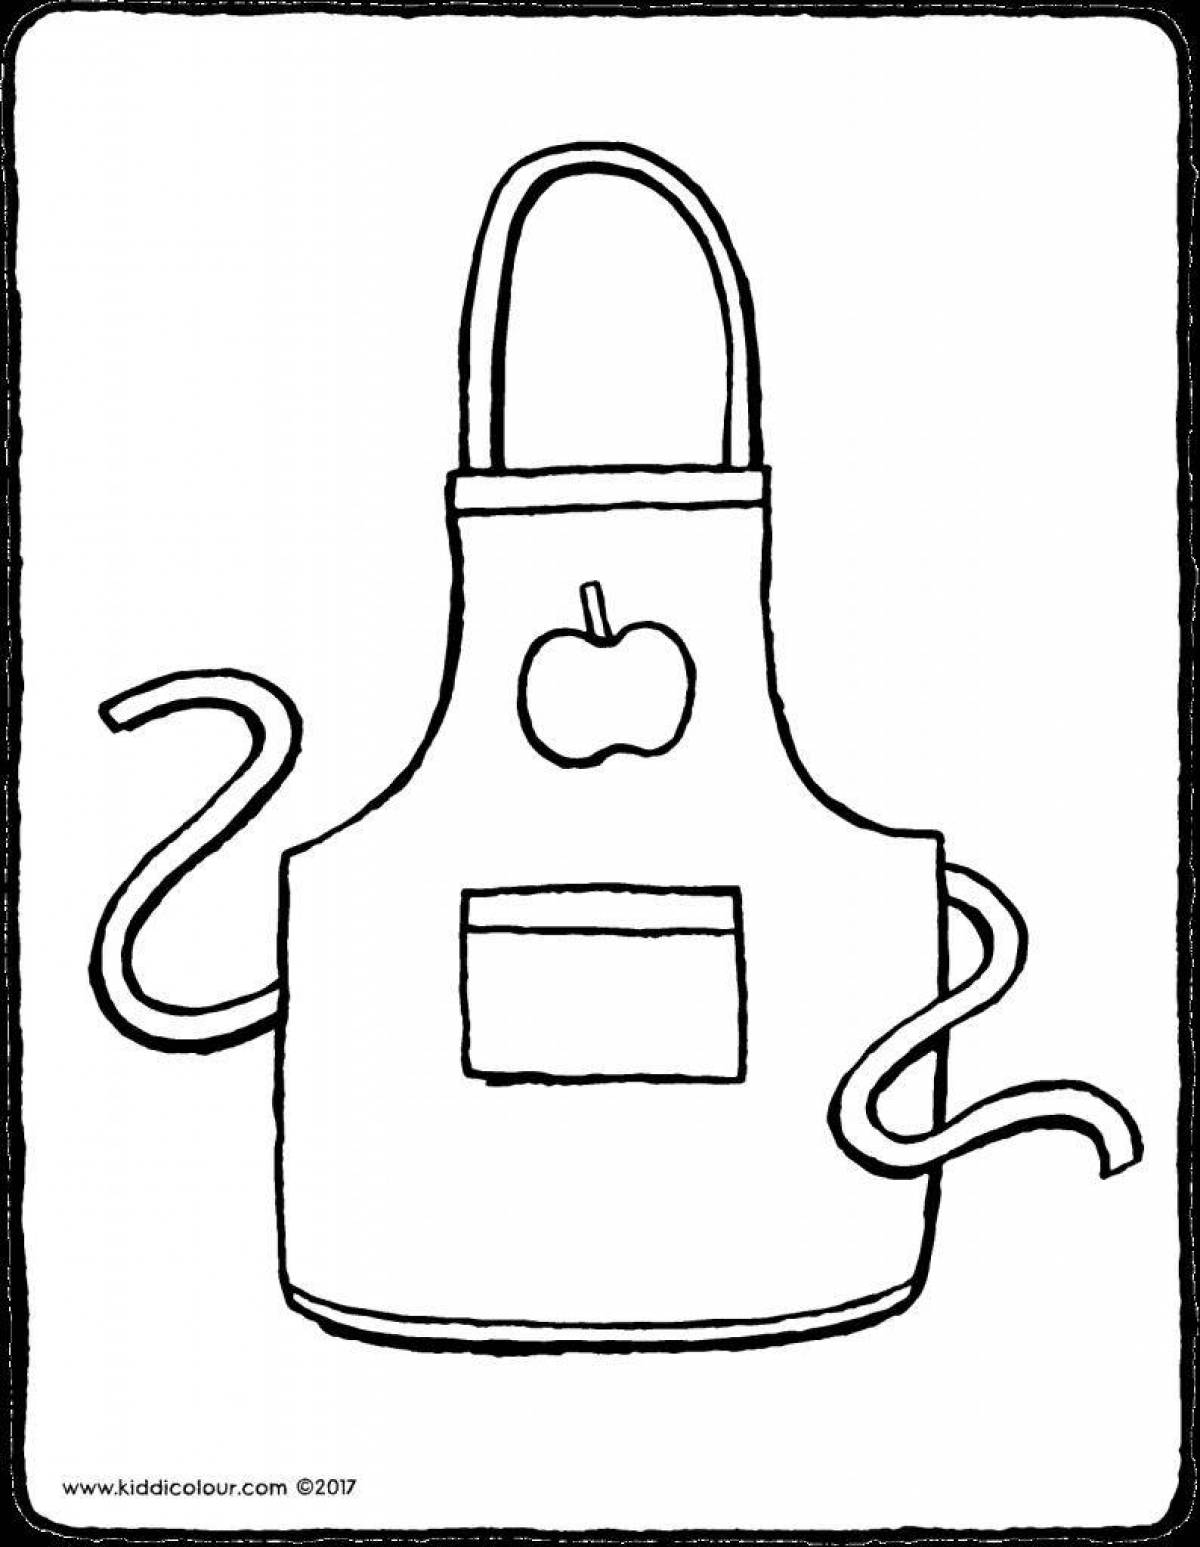 Children's chef's apron #3